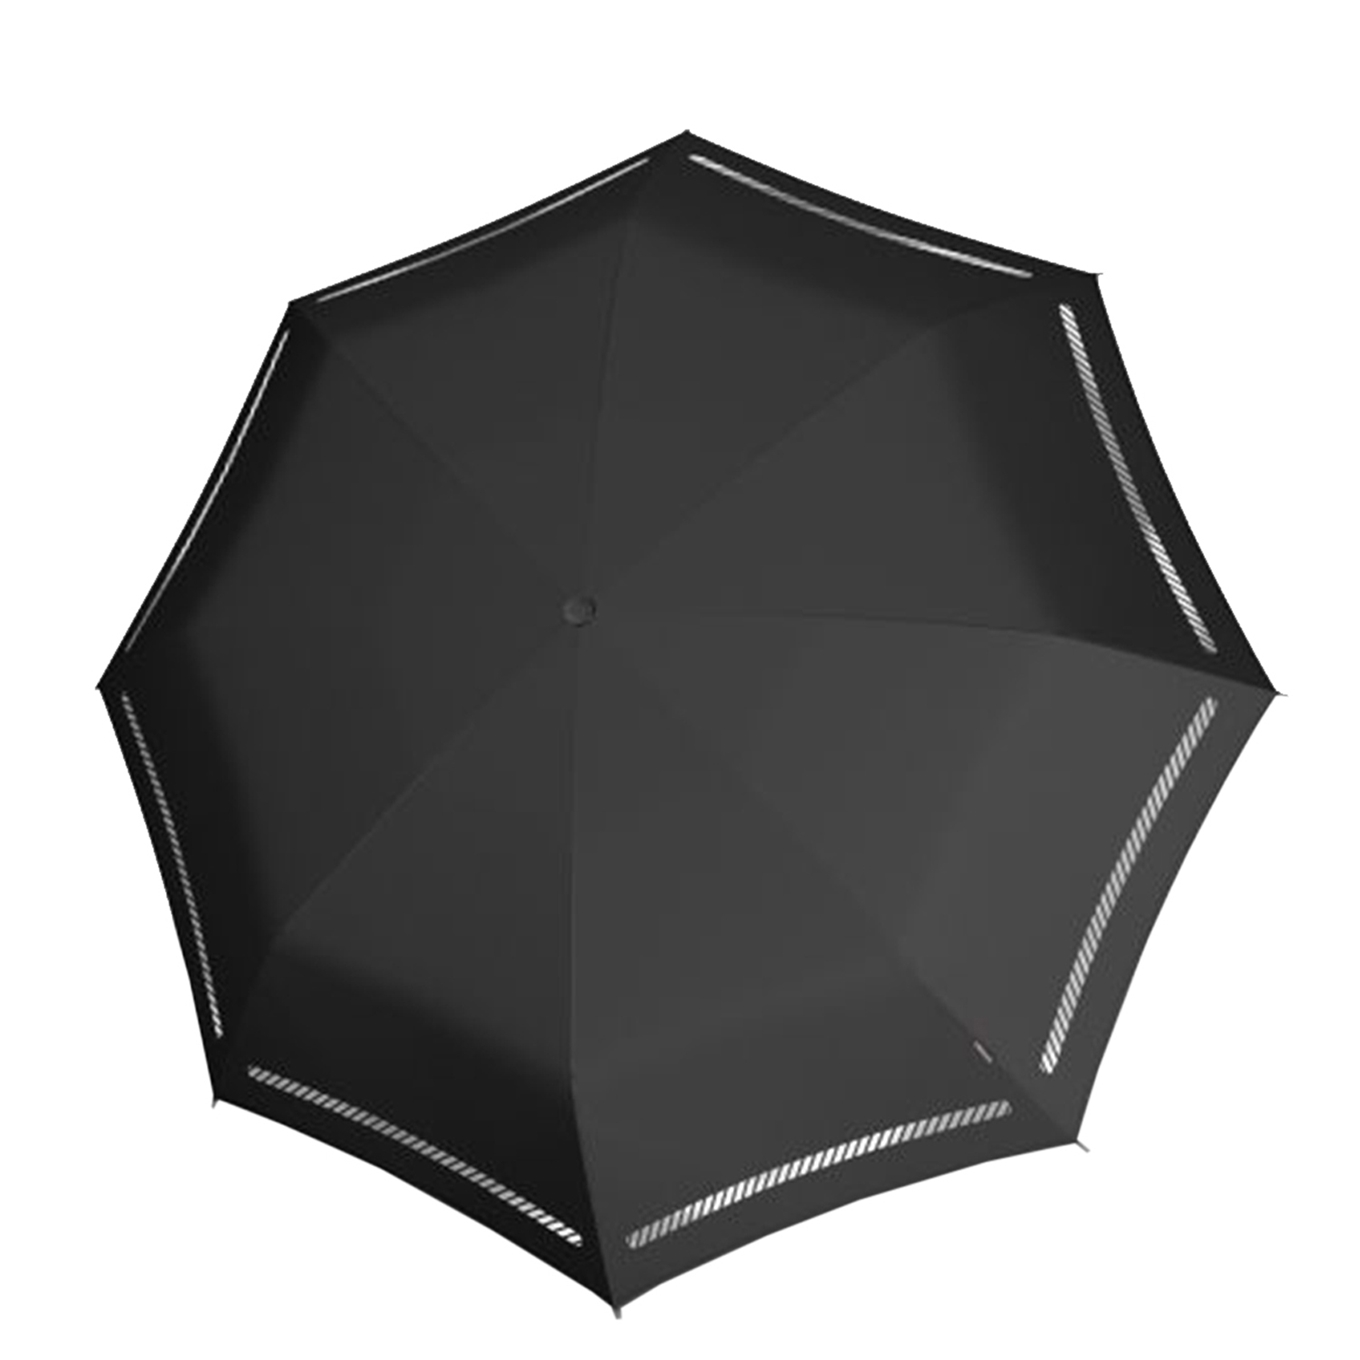 Knirps T-200 Medium Duomatic Paraplu reflective black (Storm) Paraplu